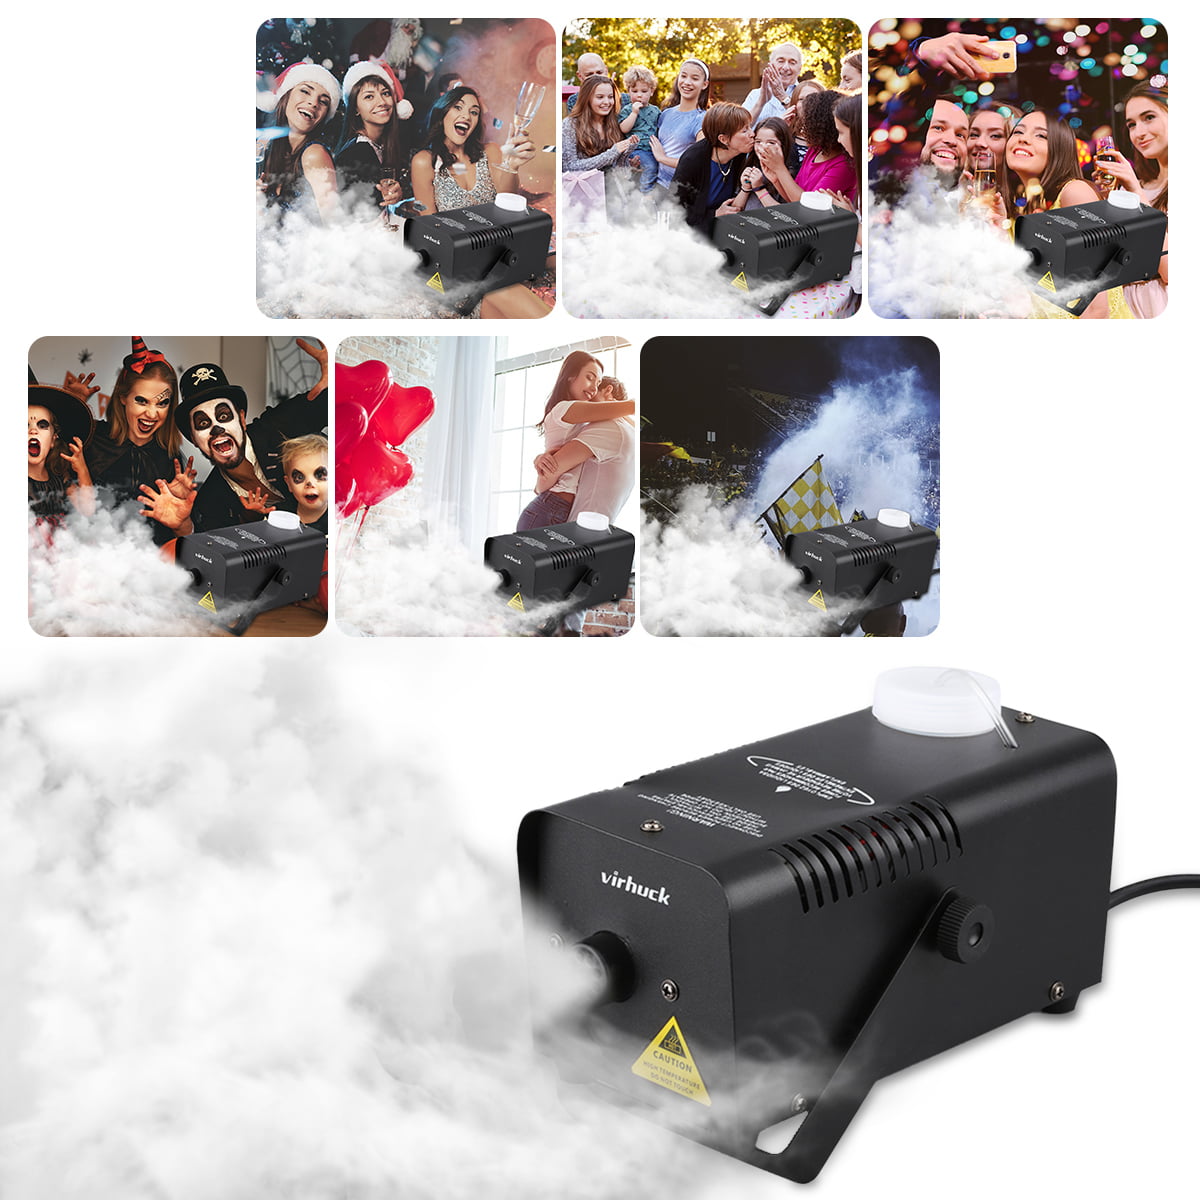 Smoke Machines for Parties Halloween Weddings Christmas Parties Dance or Drama Virhuck 400-Watt Portable Fog Machine with Wireless Remote Control